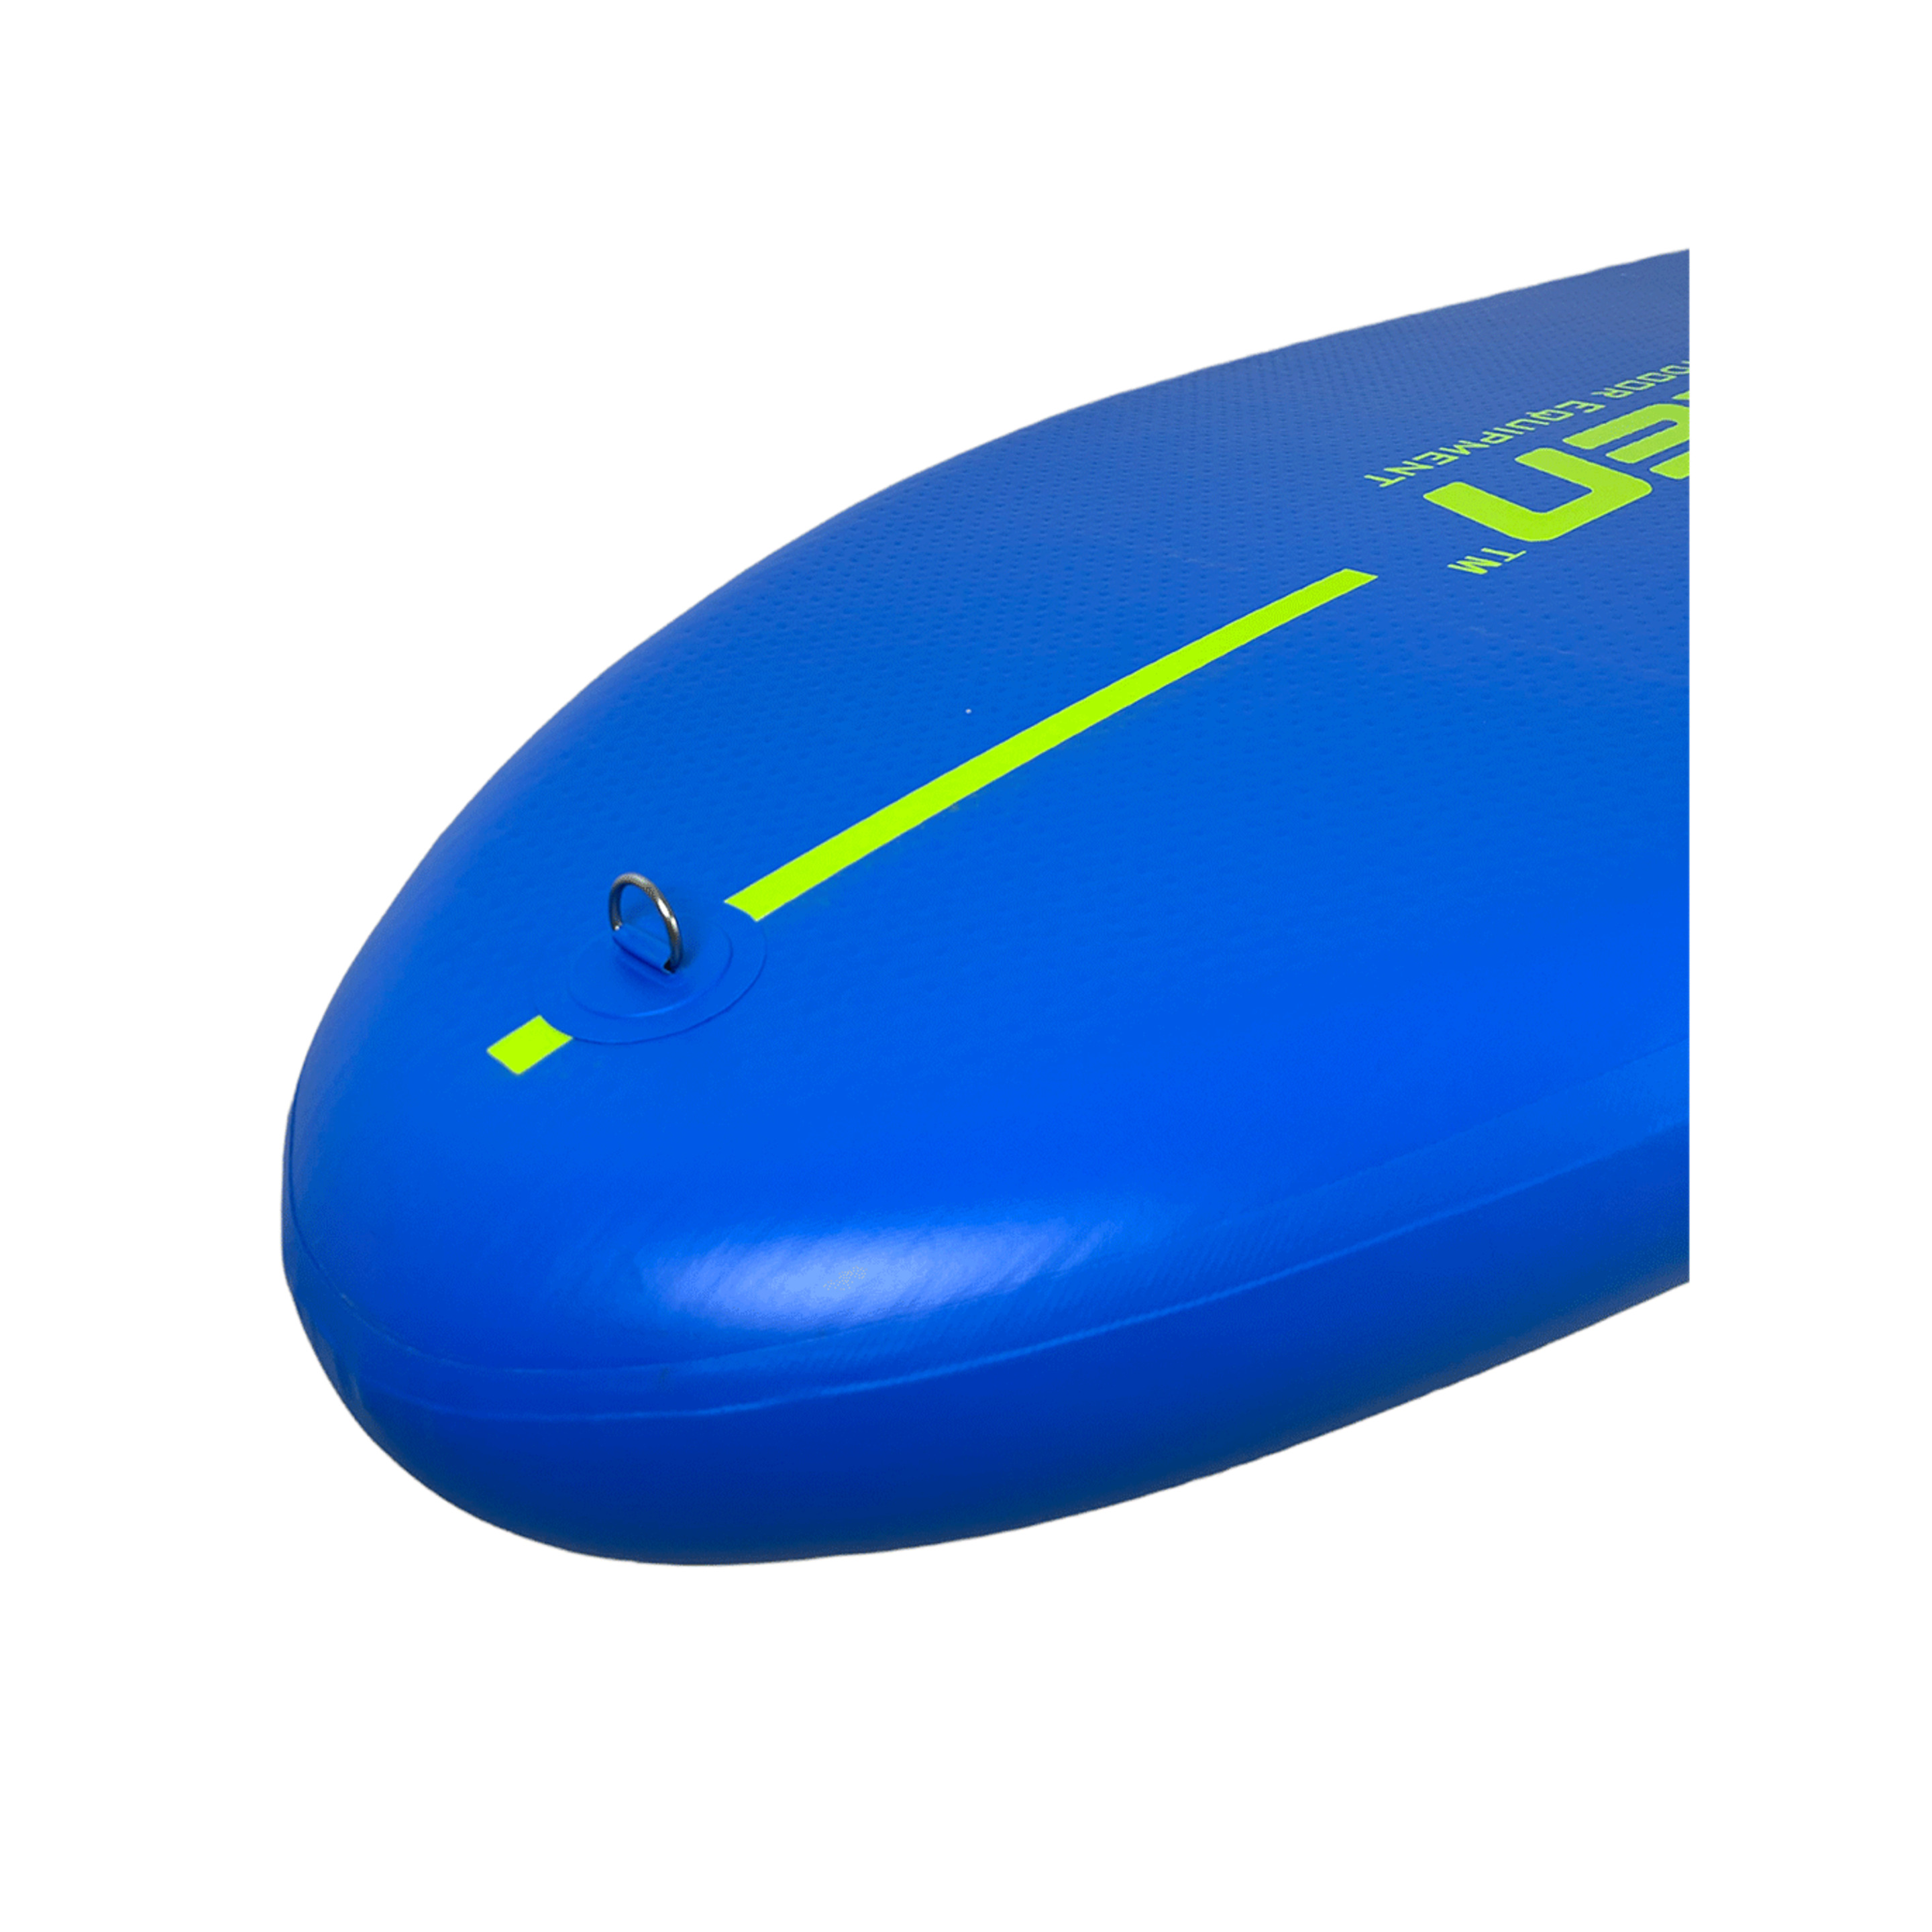 Tabla Paddle Surf Hinchable Surfren S3 12'0"(365 Cm) - Verde/Azul Oscuro - Tabla Paddle Surf S3 Hinchable  MKP